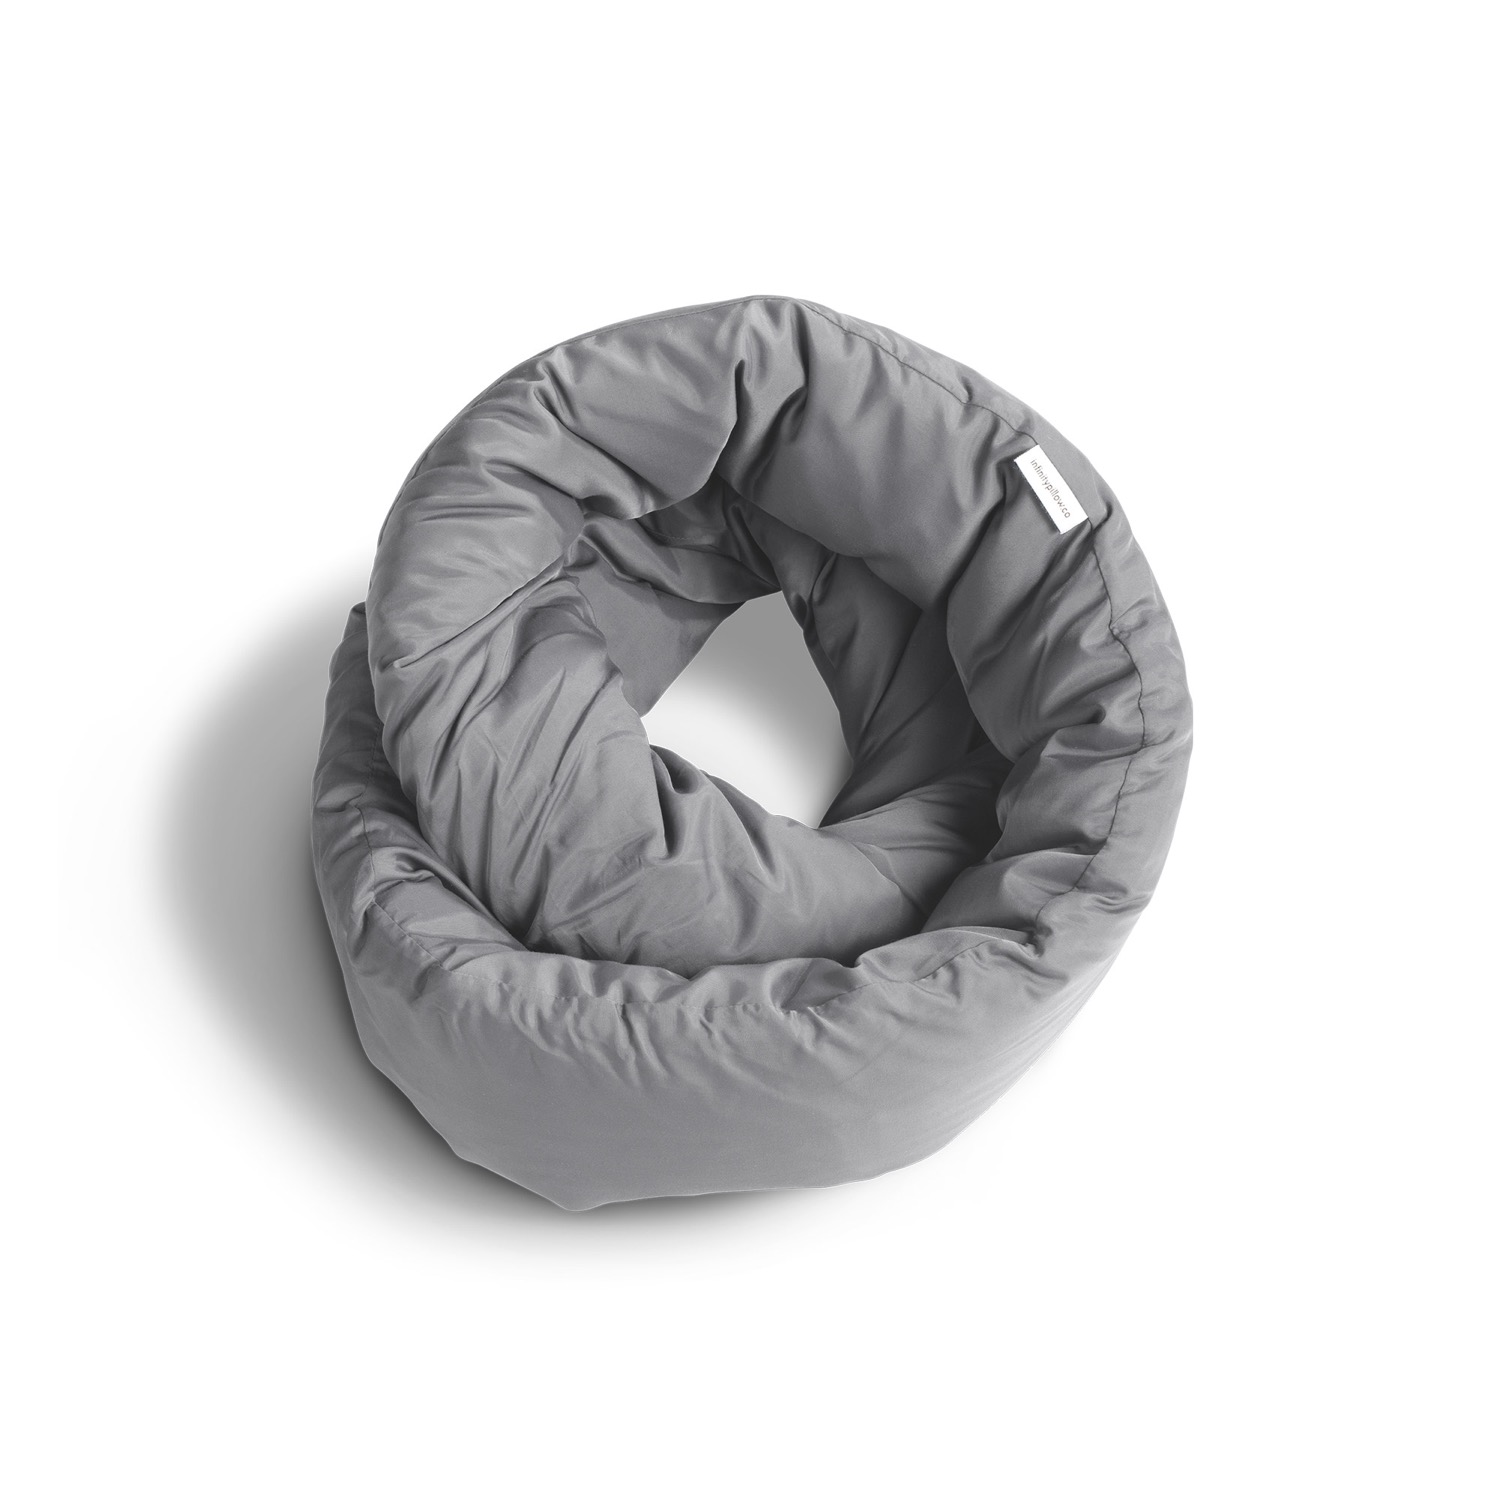 Infinity pillow - tour de cou (gris)